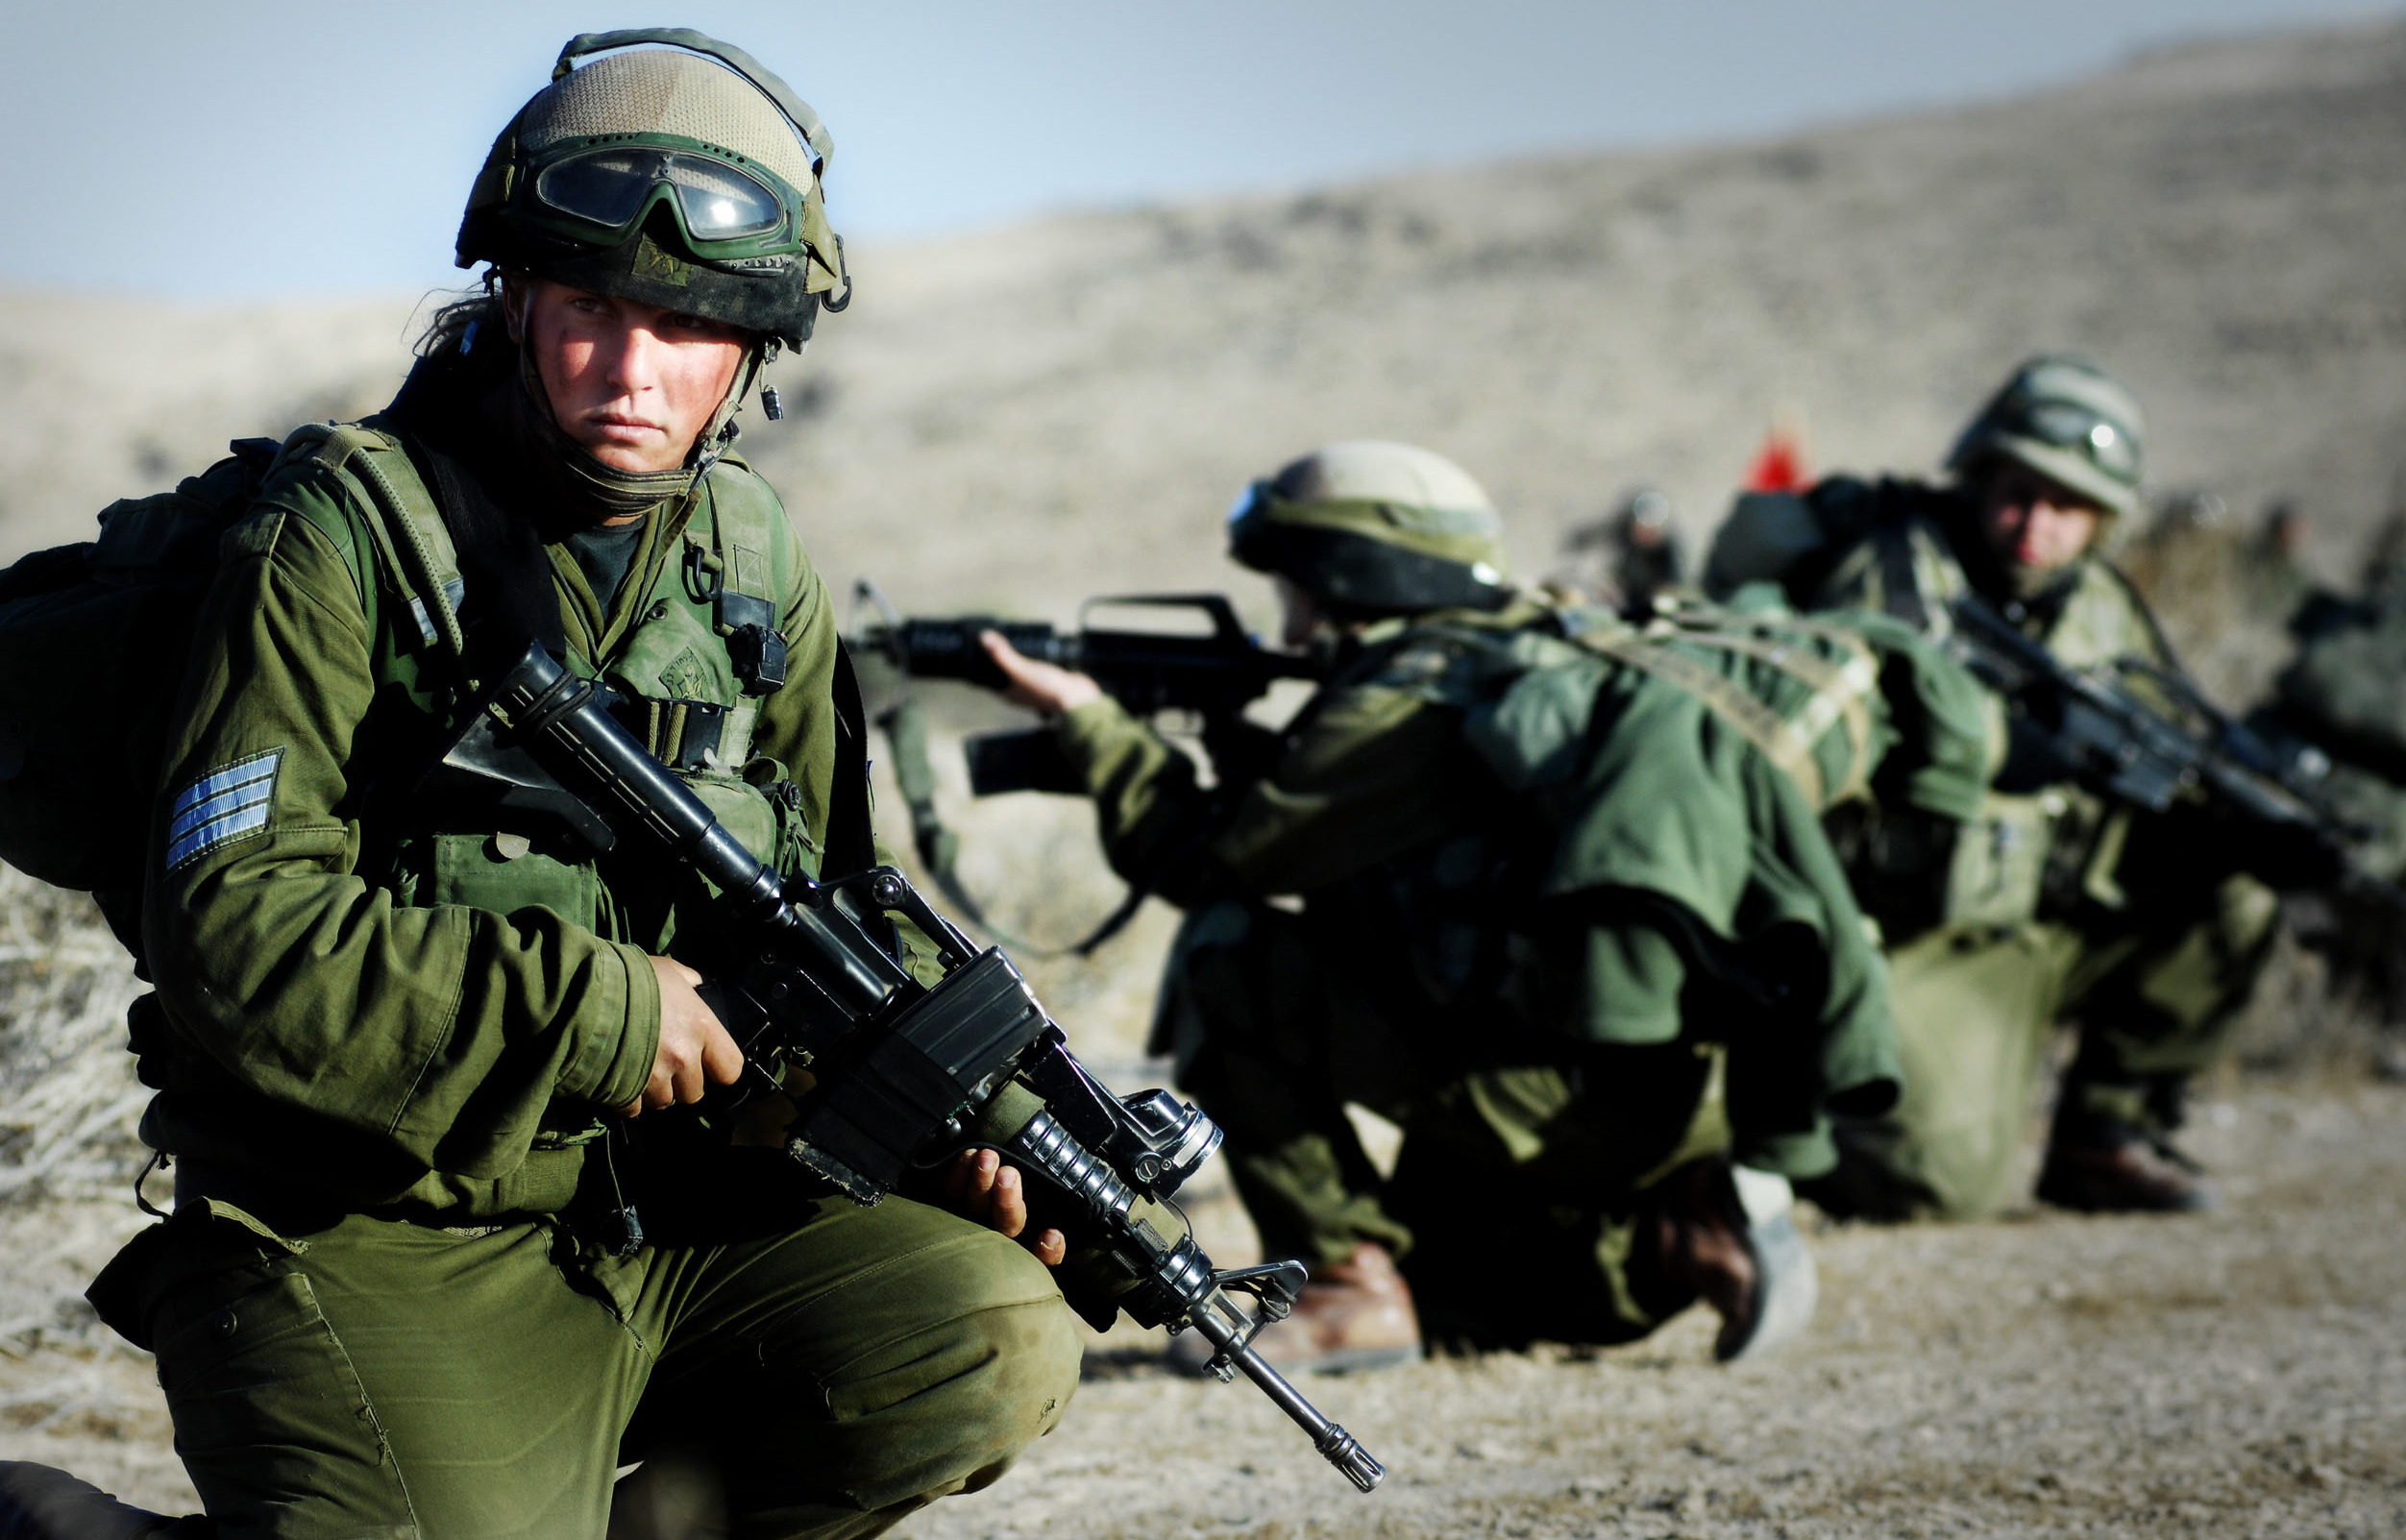 Shooting reported around Palestinian town Huwara, Israeli military says 